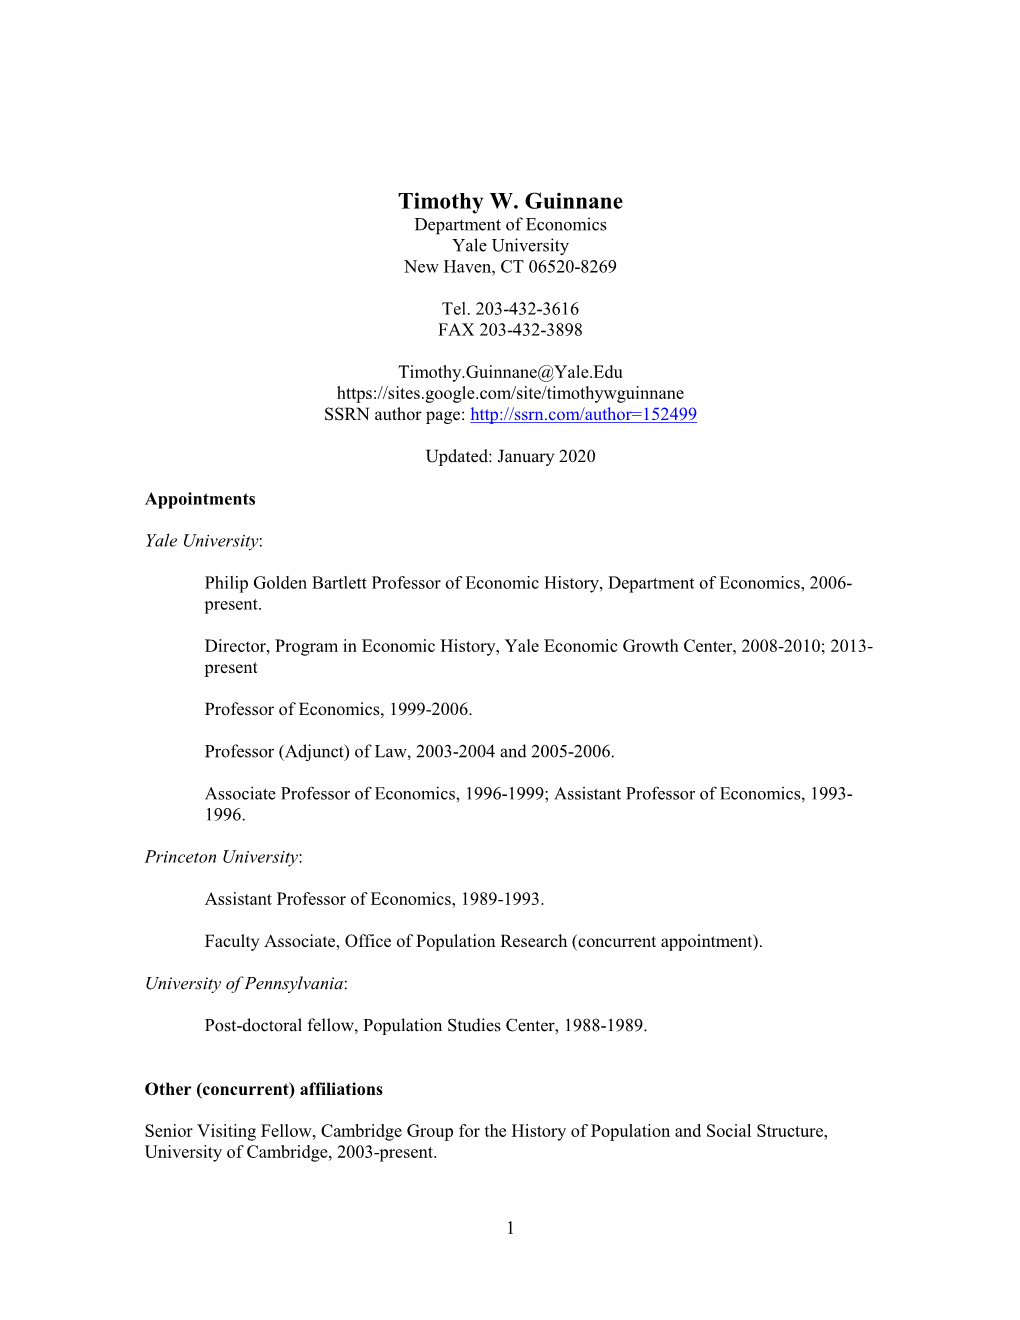 Timothy W. Guinnane Department of Economics Yale University New Haven, CT 06520-8269